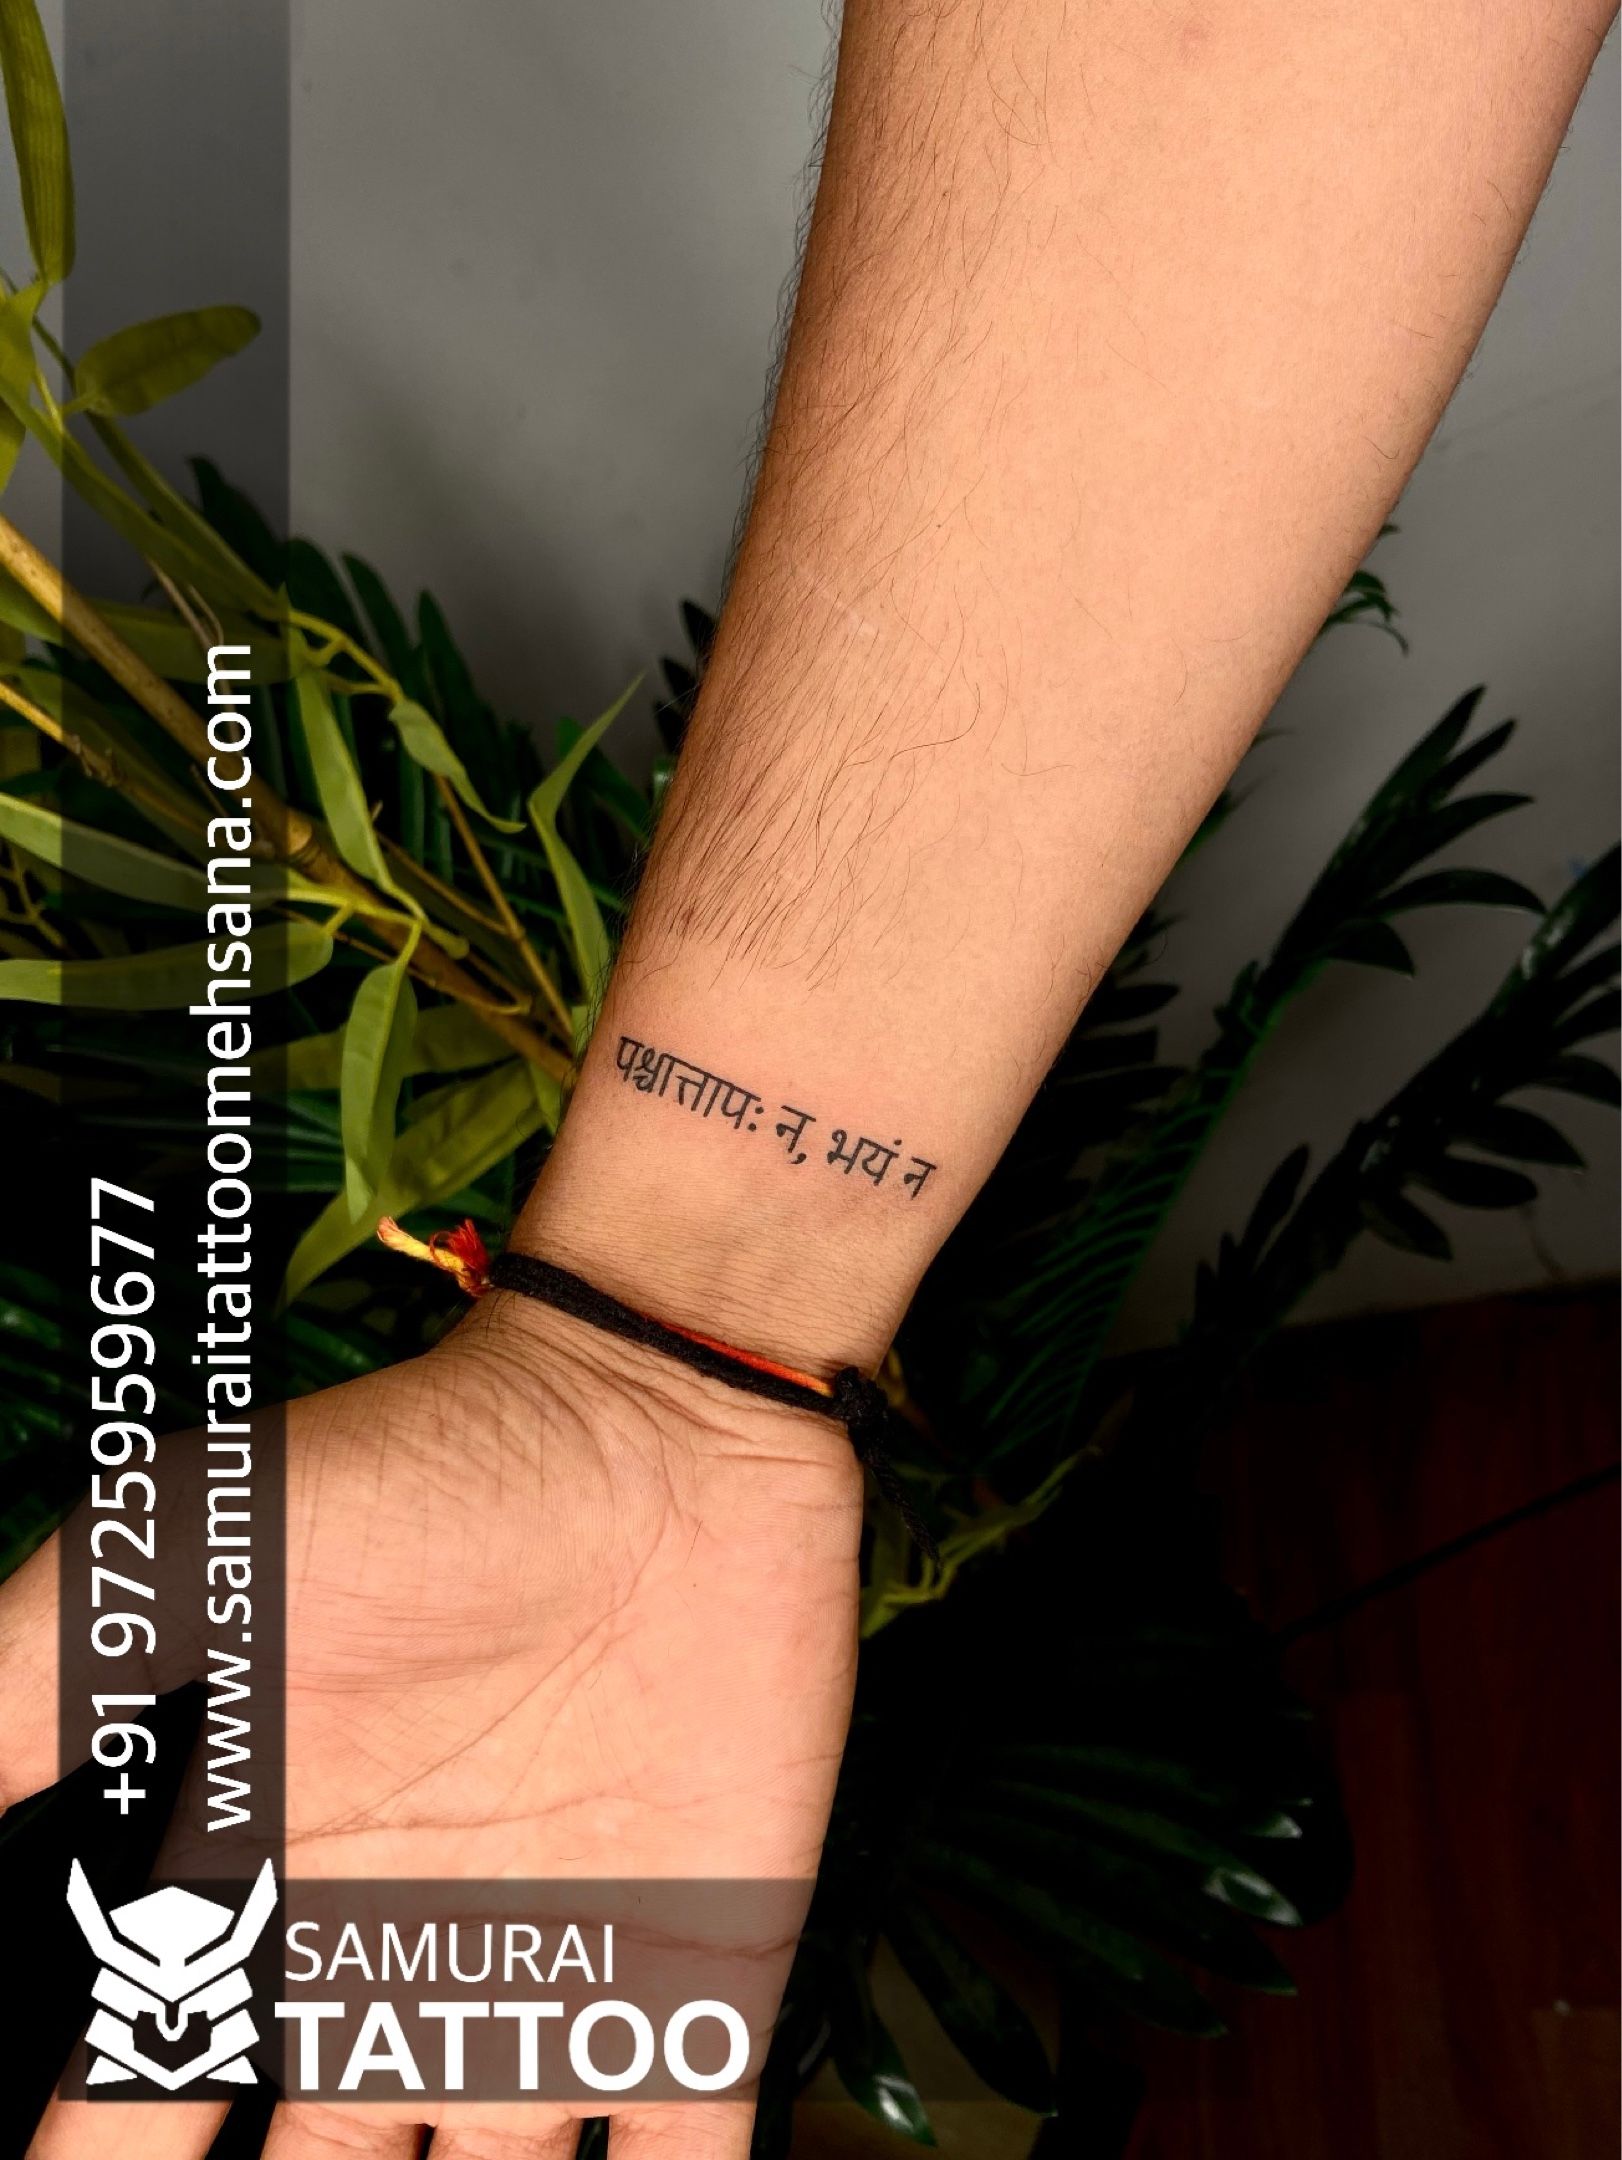 Sanskrit tattoo by Jasen @ In The Skin Tattoos : r/tattoos